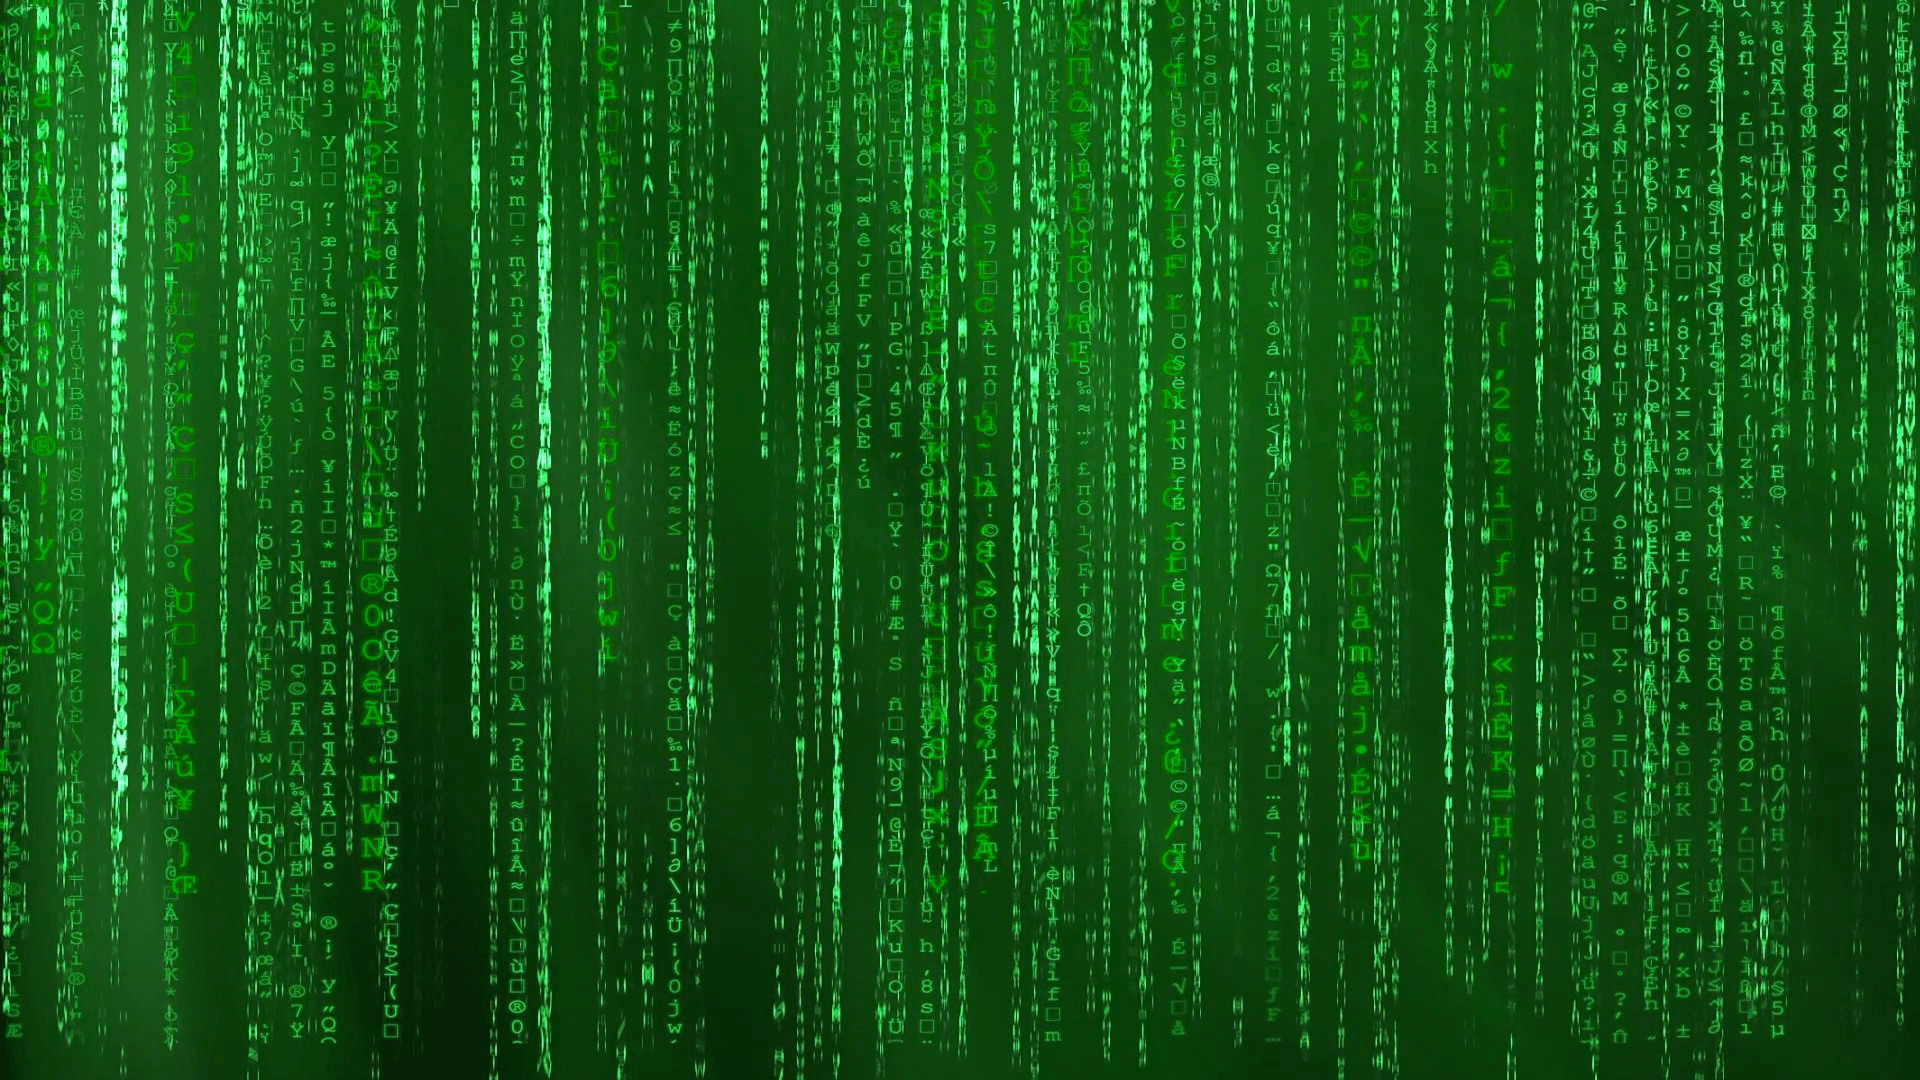 Green animated matrix background, computer code with symbols